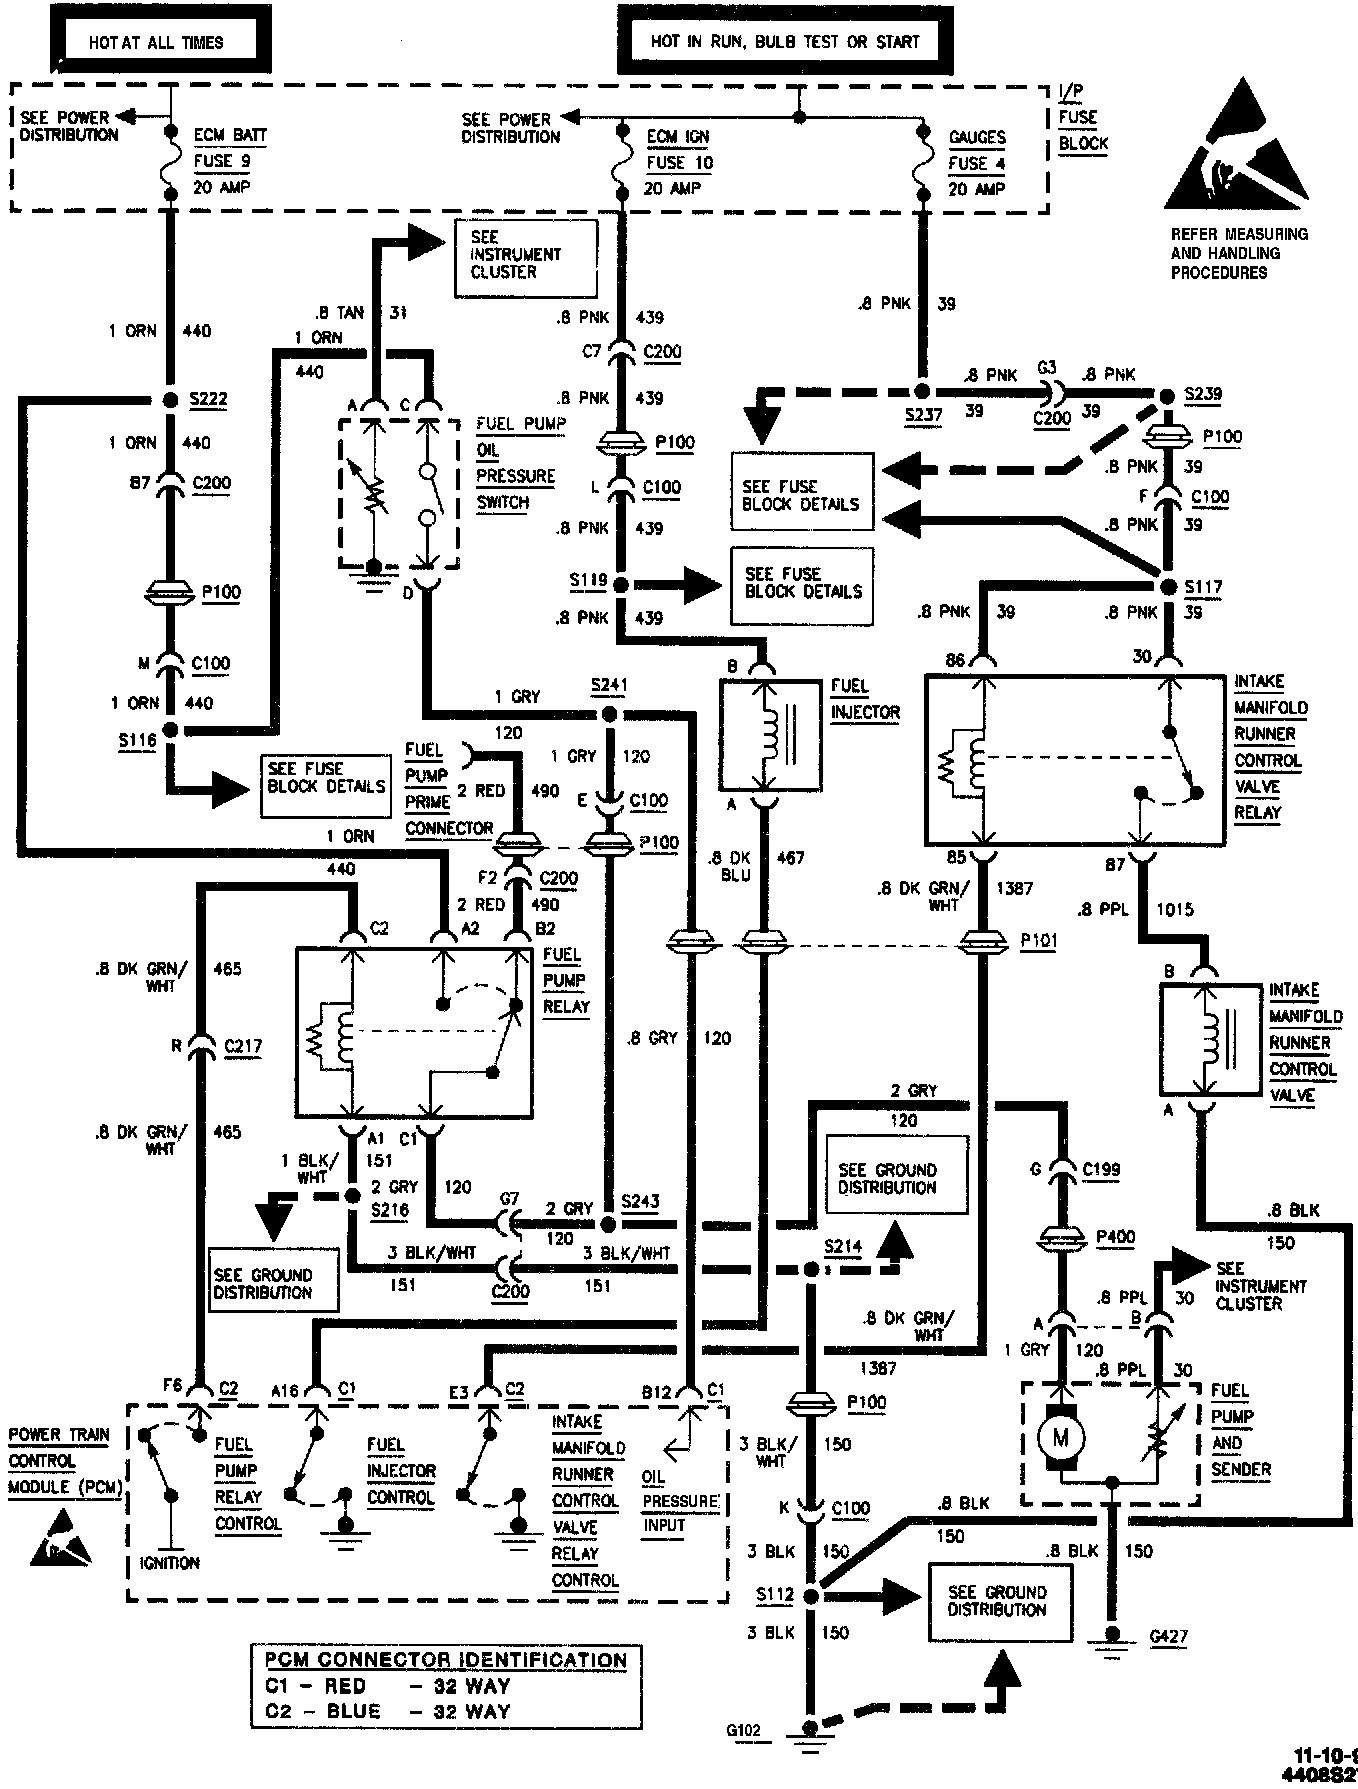 98 Chevy Blazer Engine Diagram 2002 Chevy S10 Wiring Diagram Wiring Diagram Meta Of 98 Chevy Blazer Engine Diagram